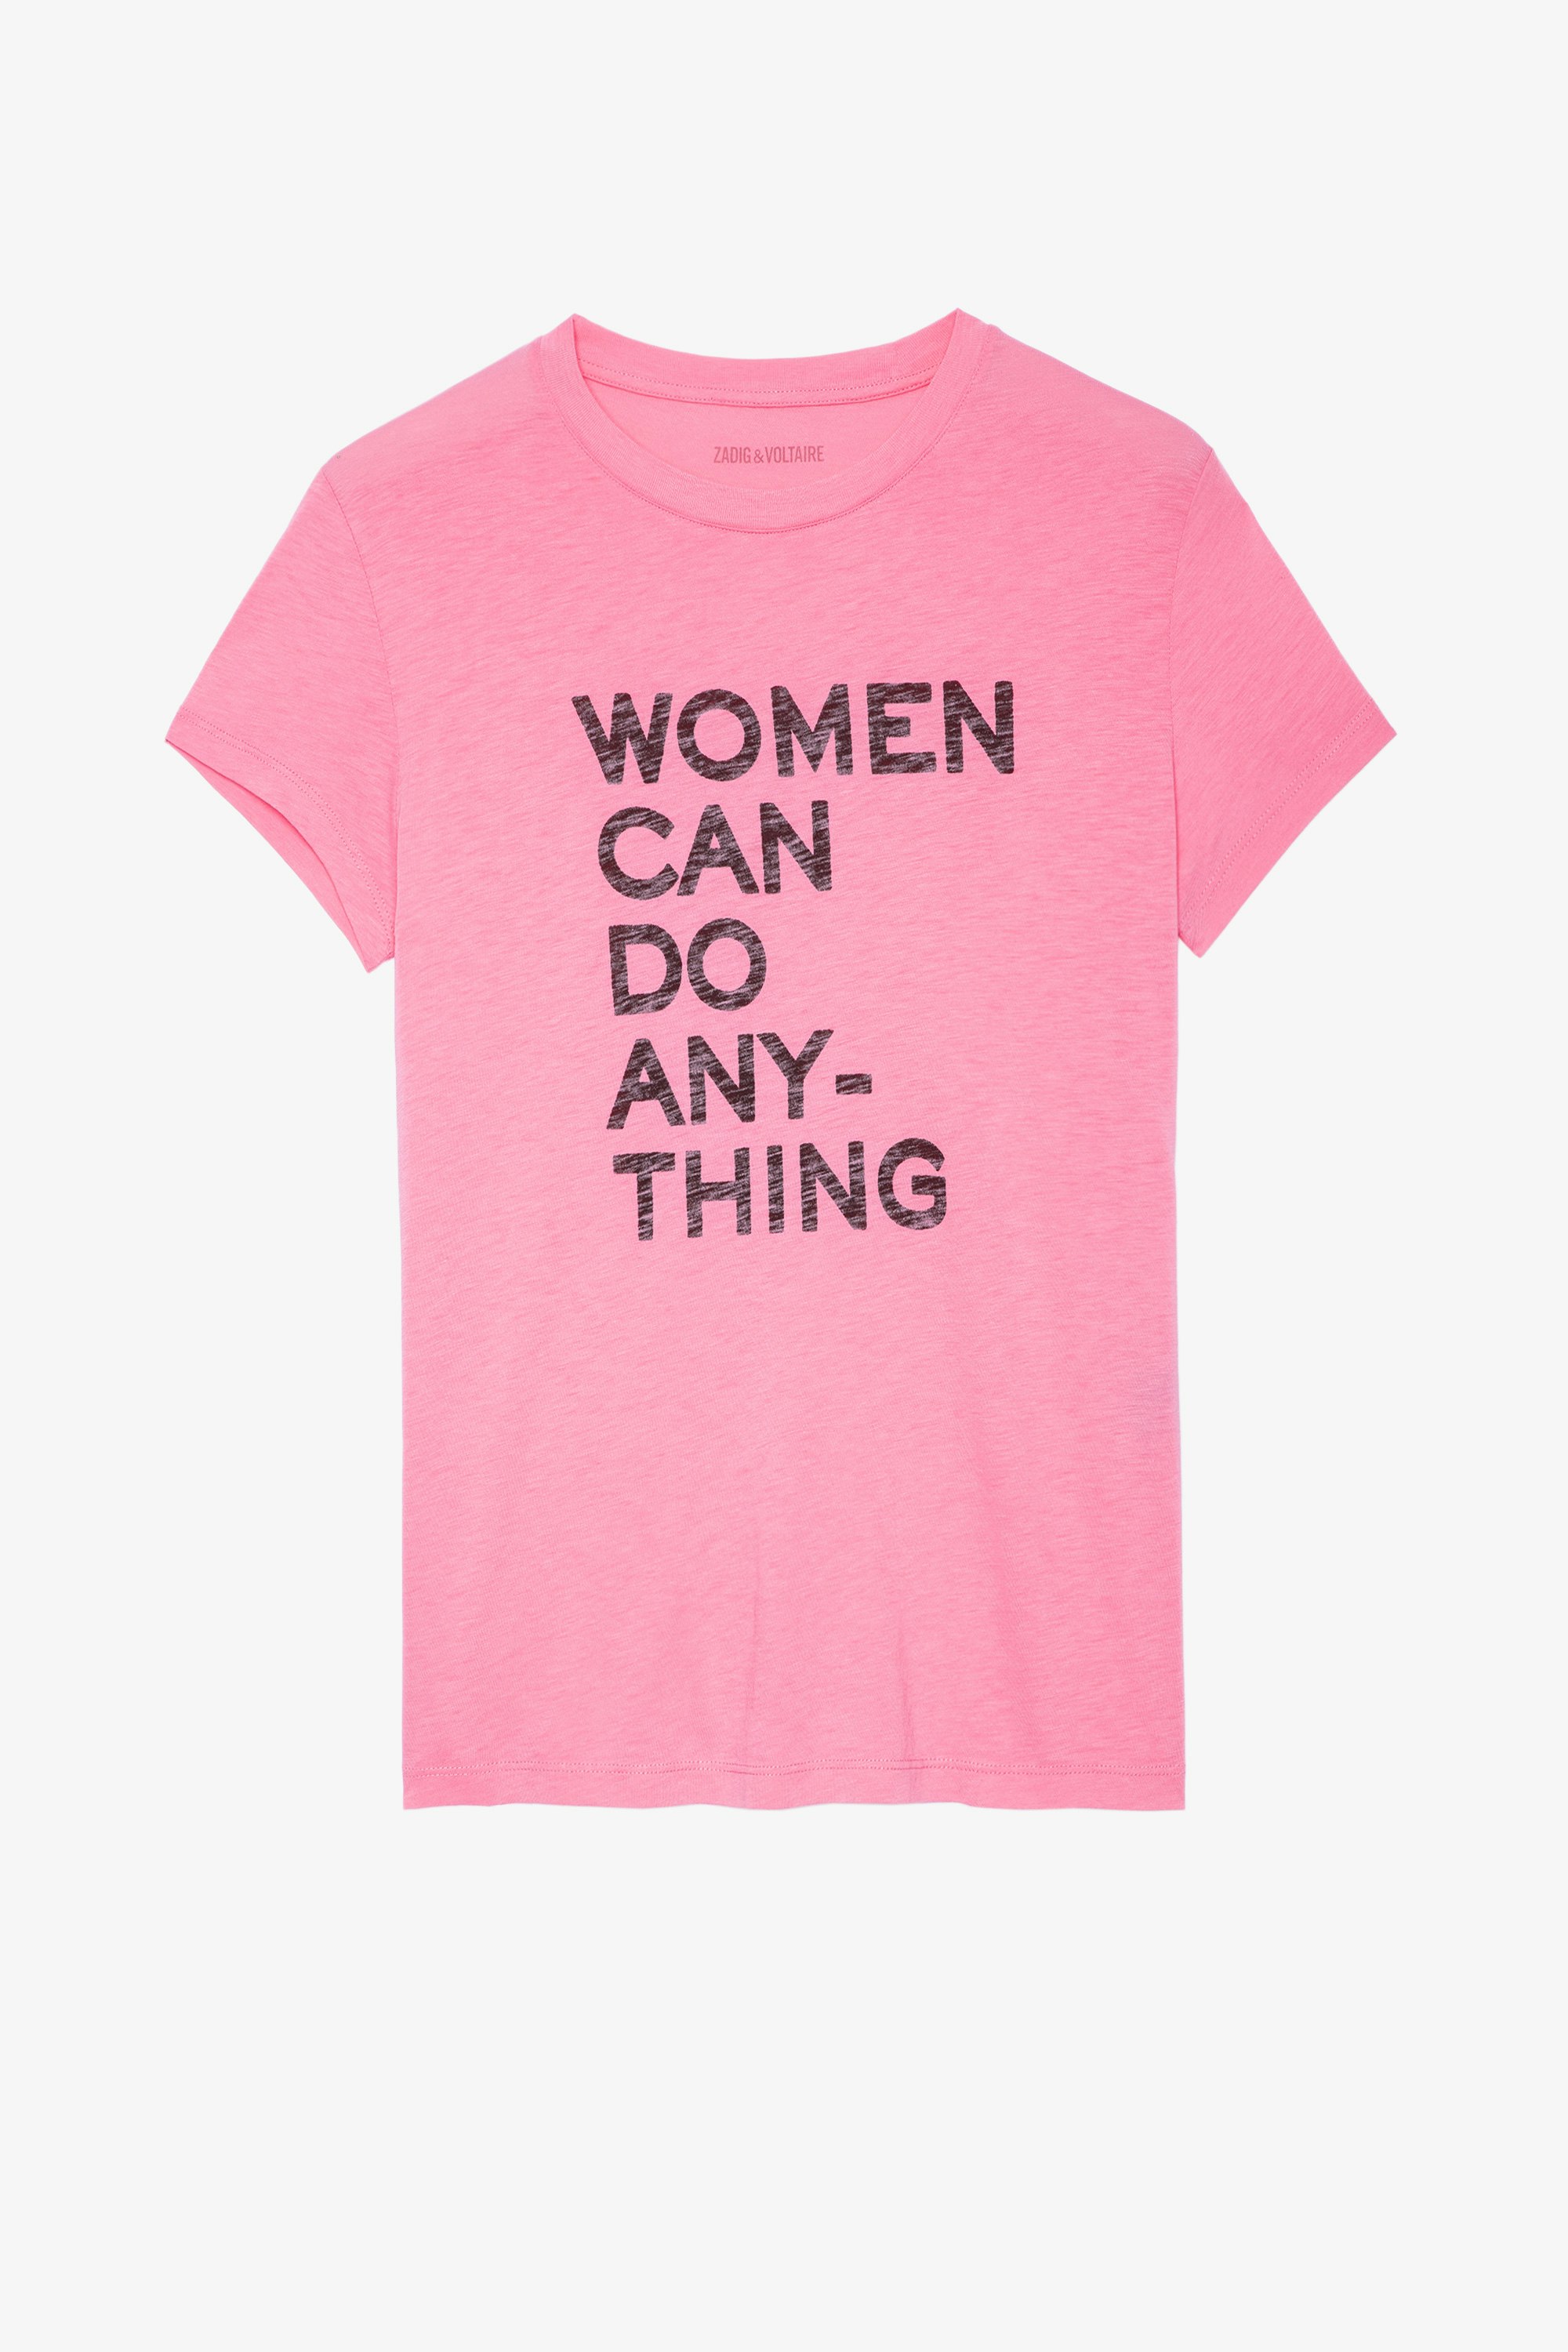 Camiseta Walk Women can do anything Camiseta rosa de algodón «Women can do anything» para mujer